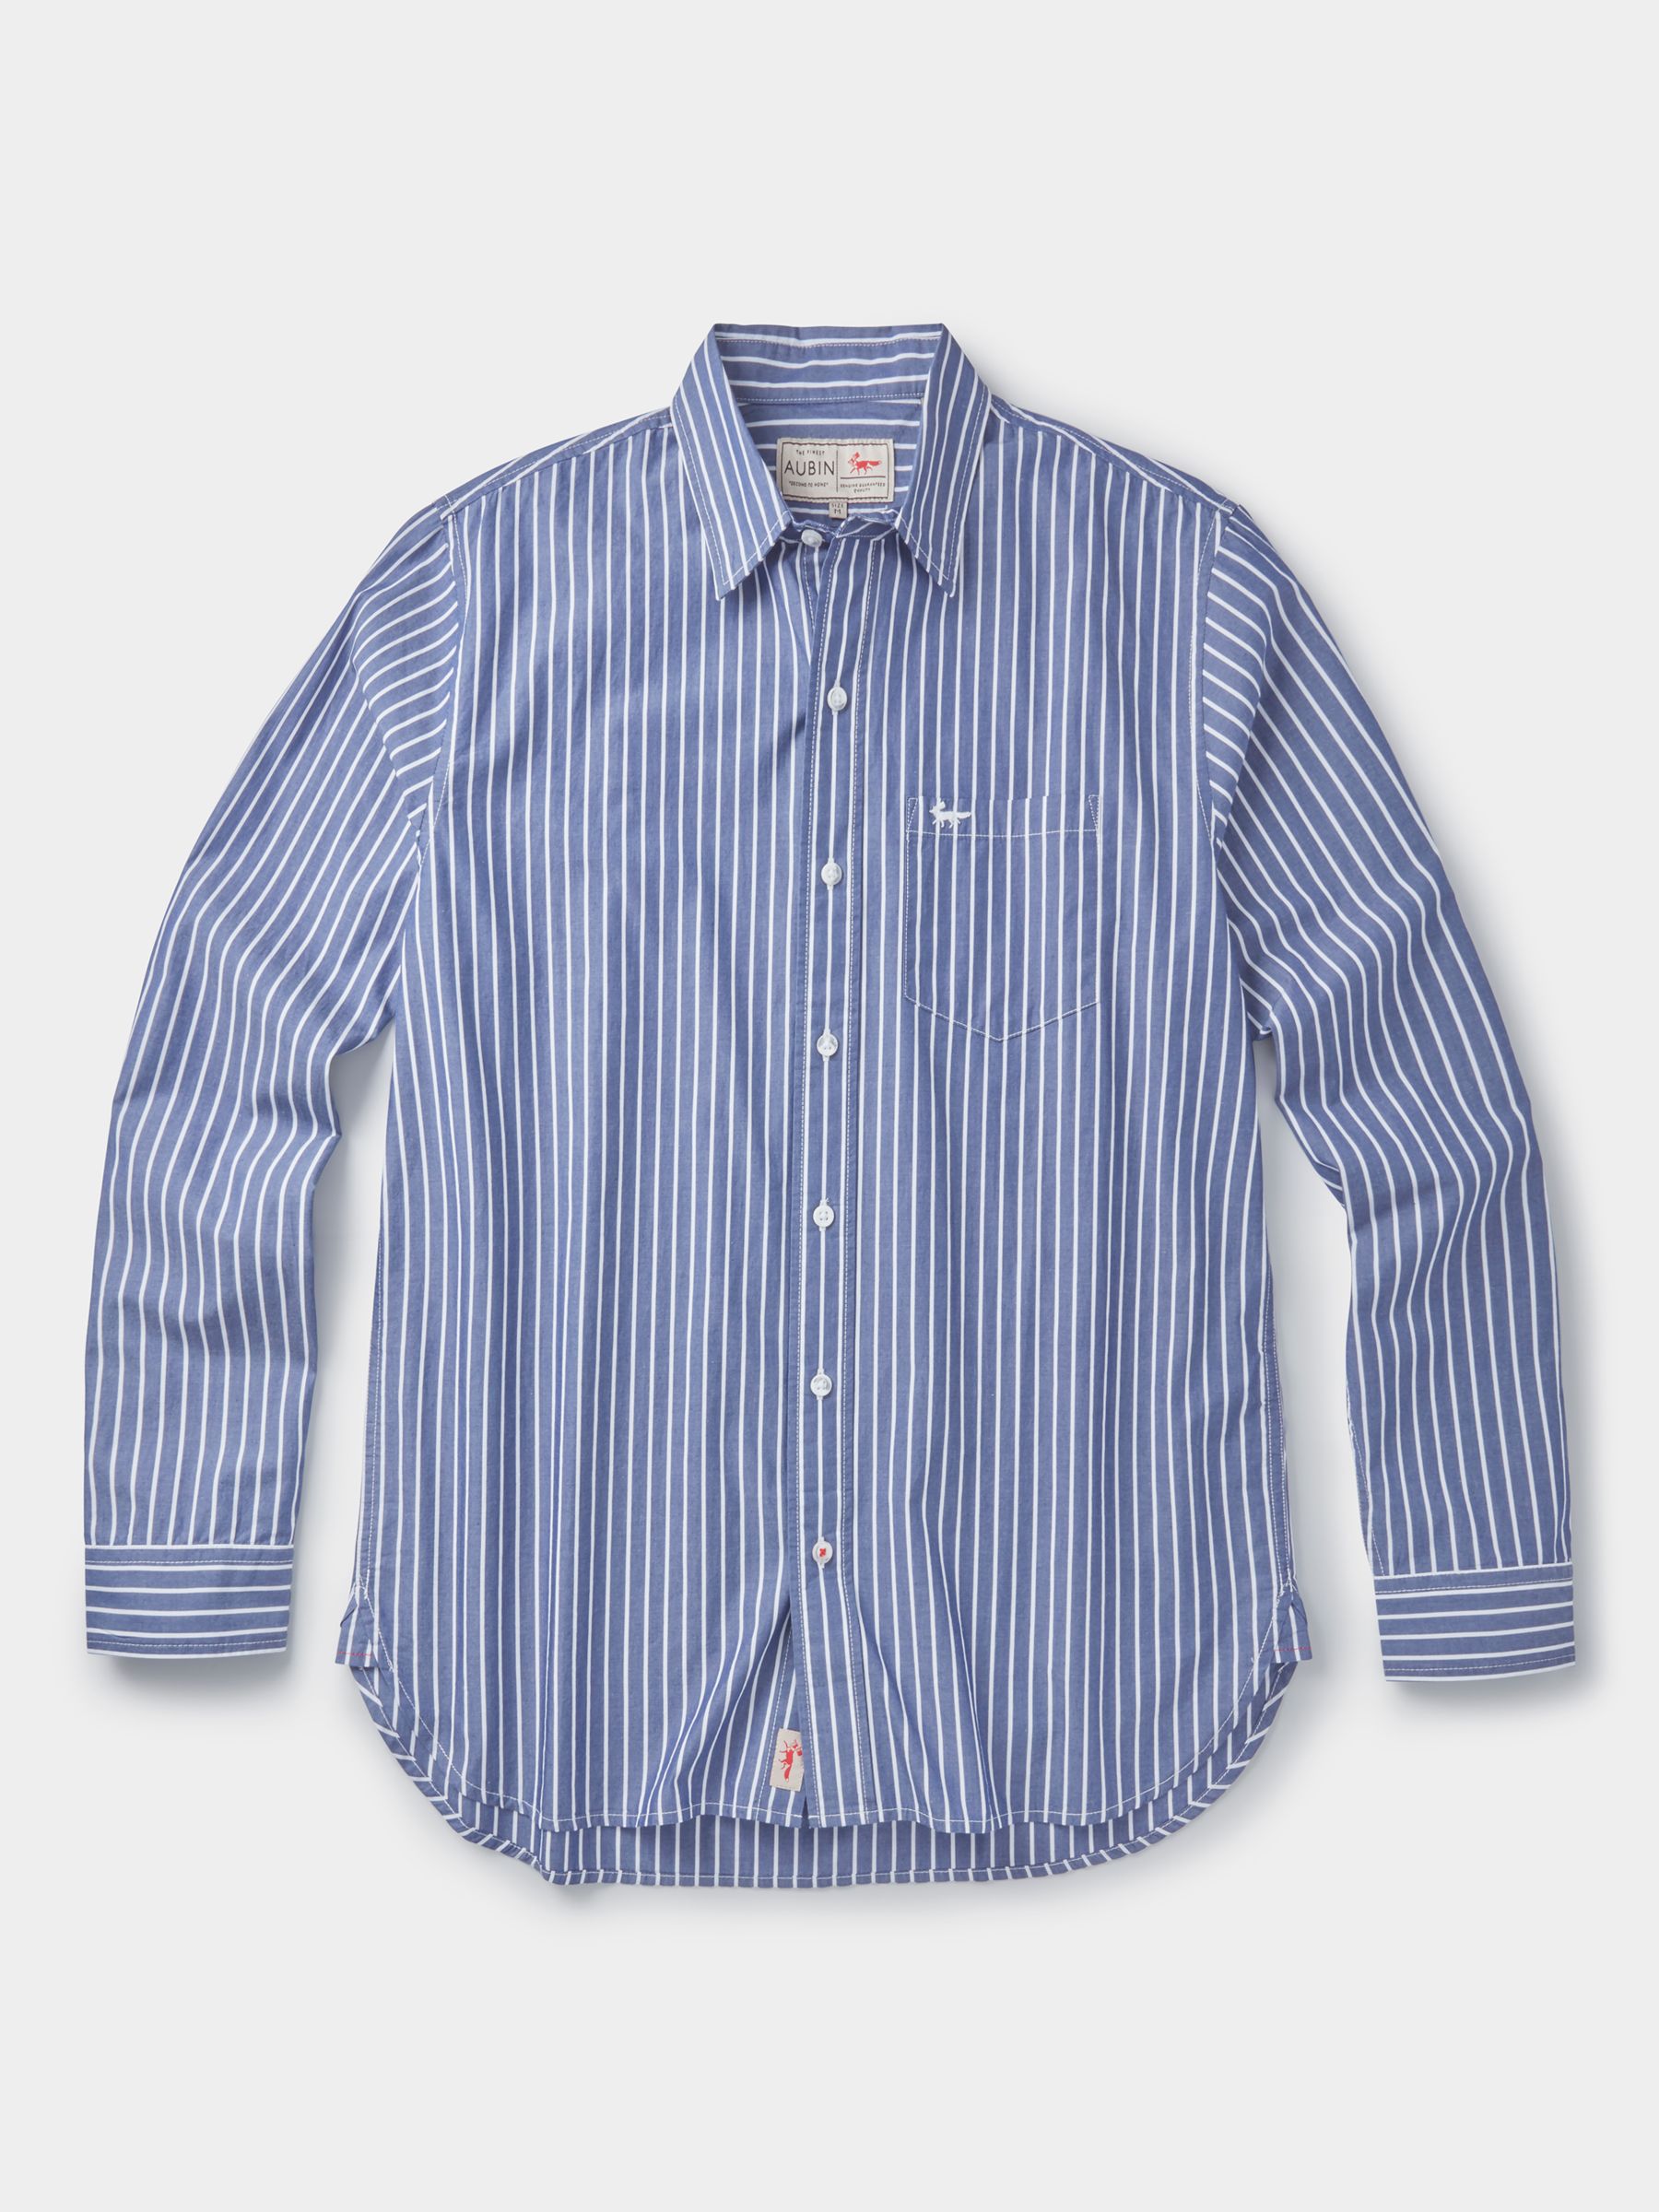 Aubin Gladstone Cotton Poplin Shirt, Blue/White, S